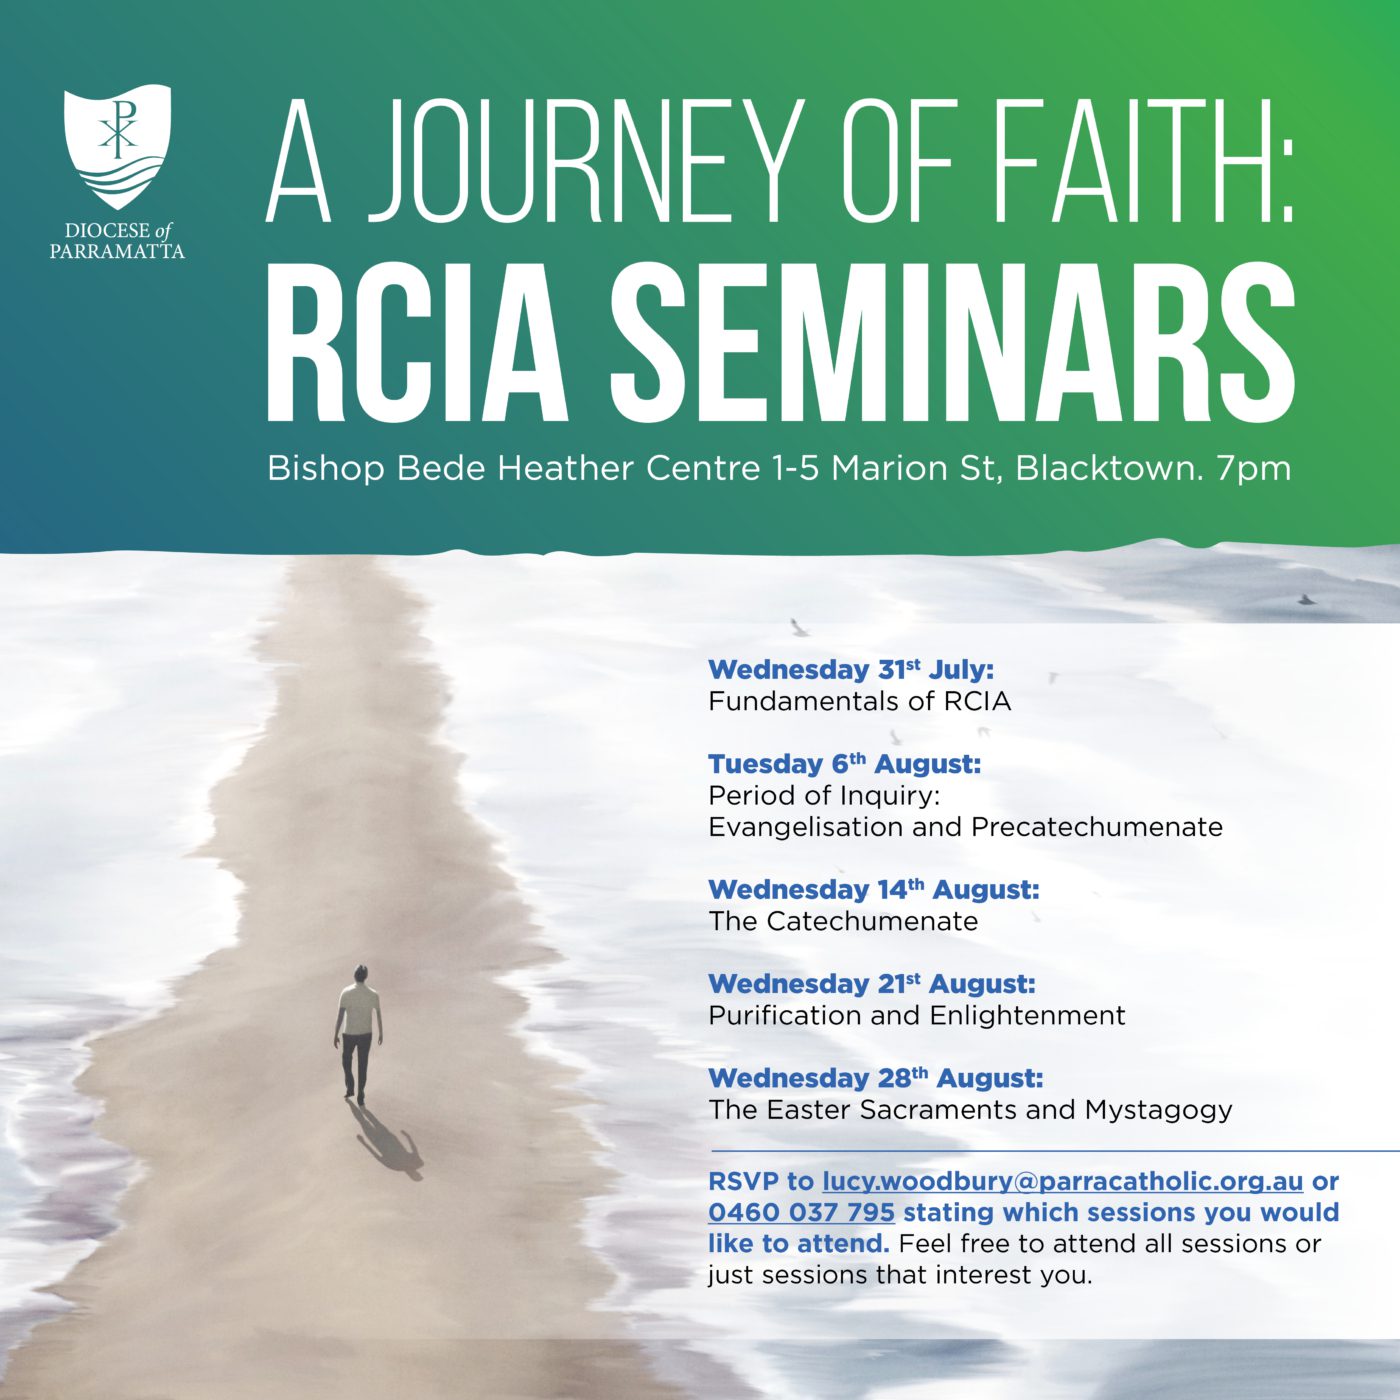 A Journey of Faith RCIA Seminars